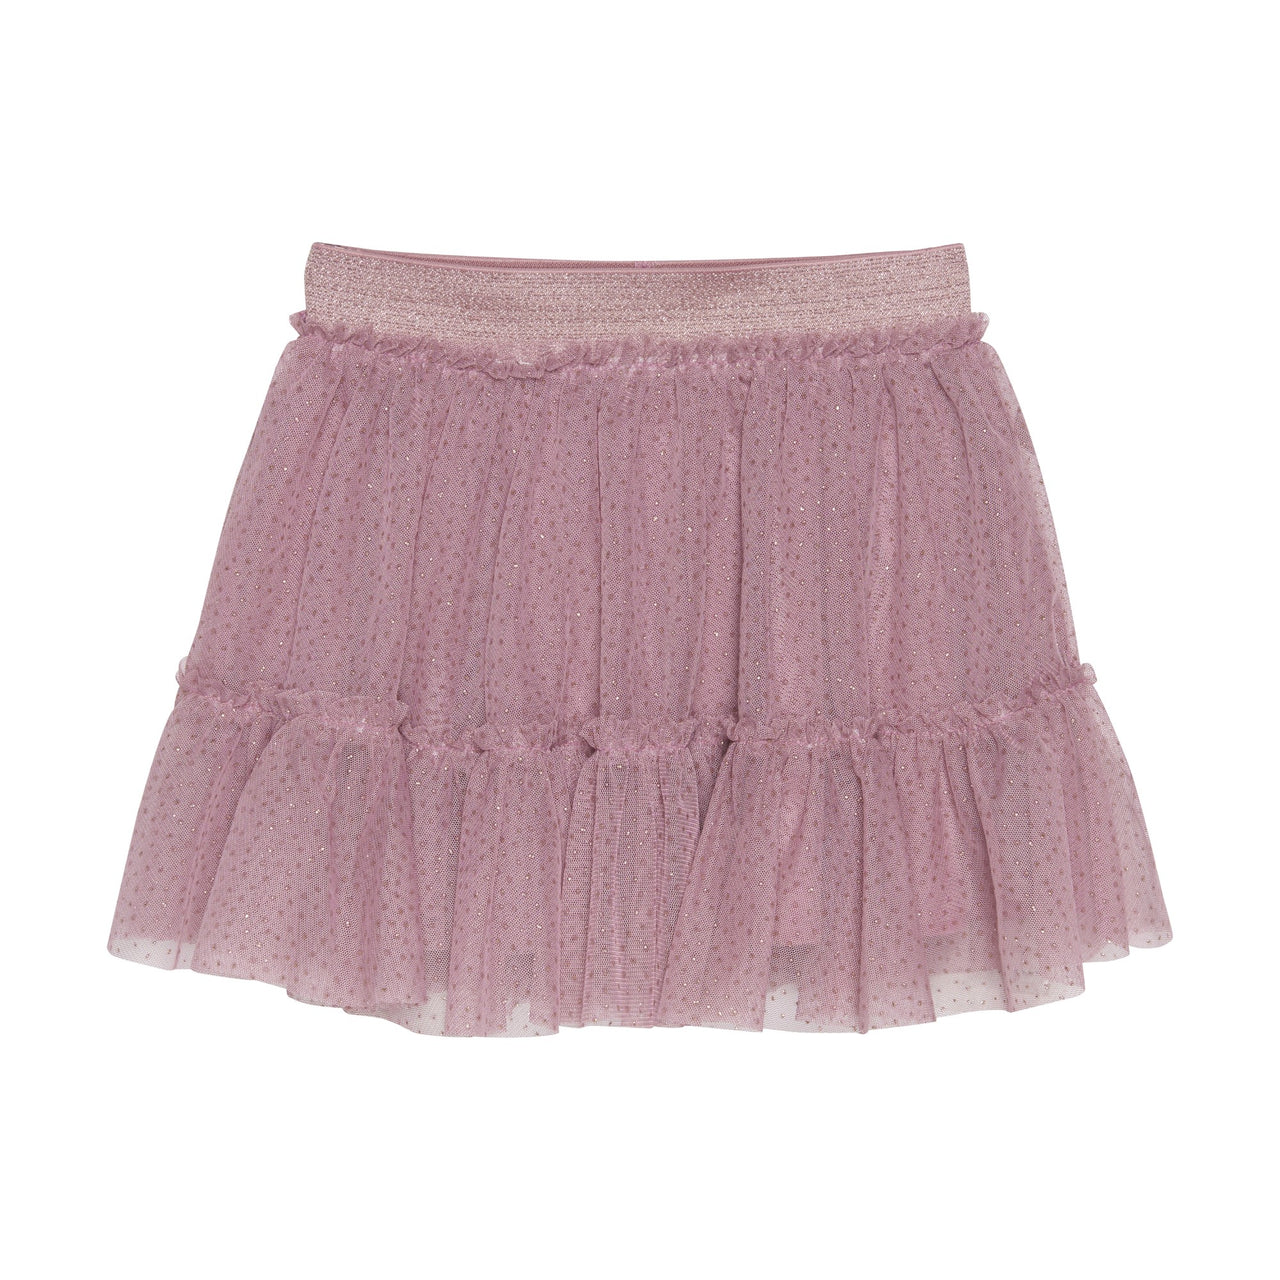 Nostalgia Rose Ruffle Skirt